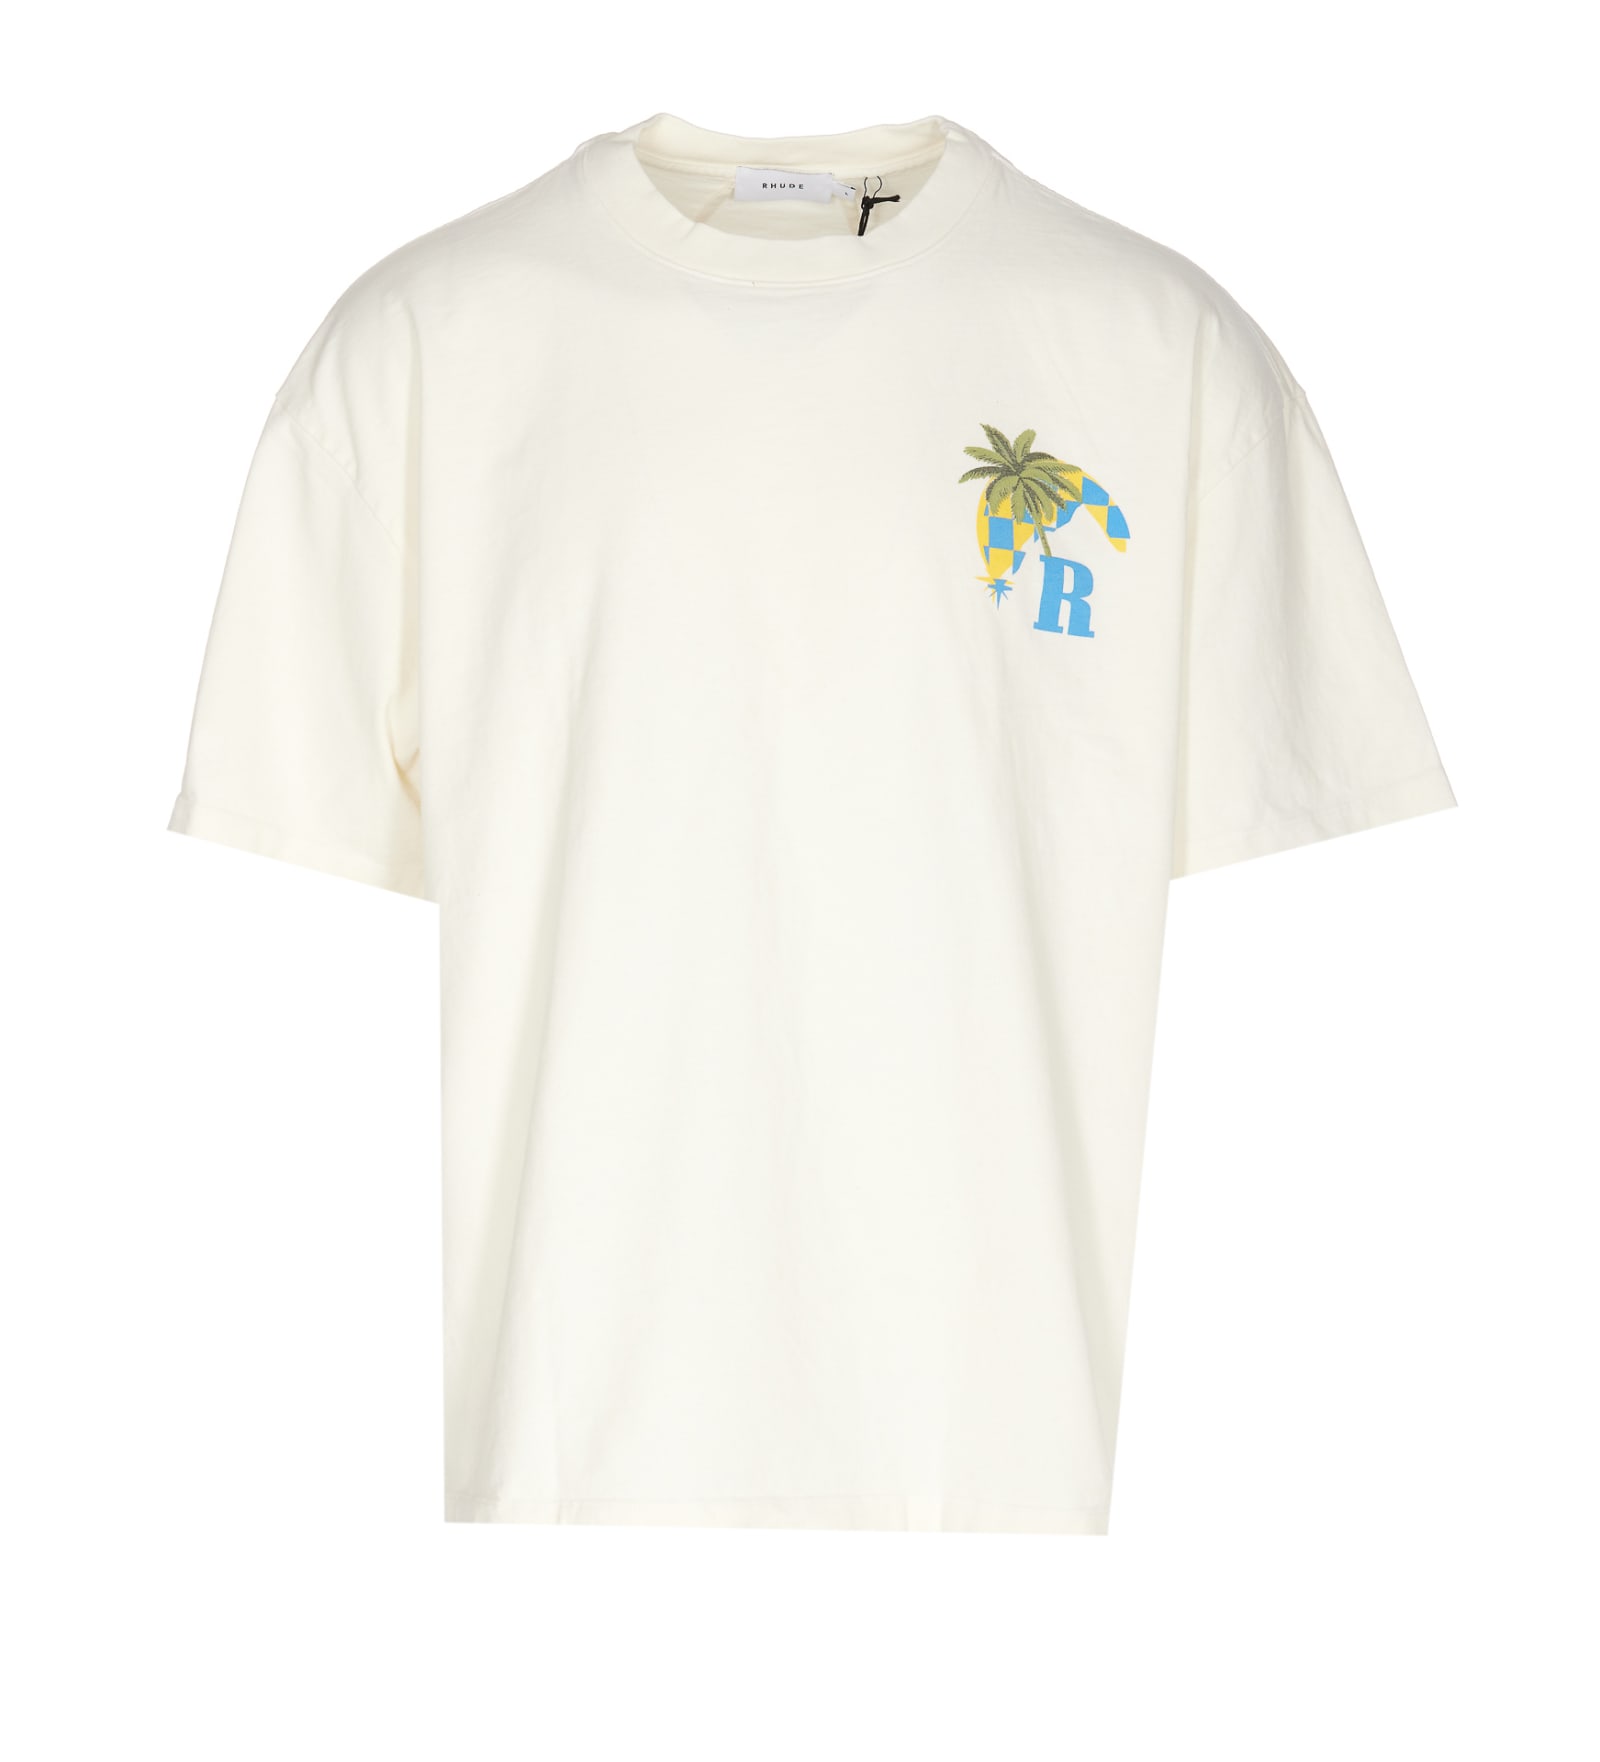 Rhude Moonlight Tropics T-shirt